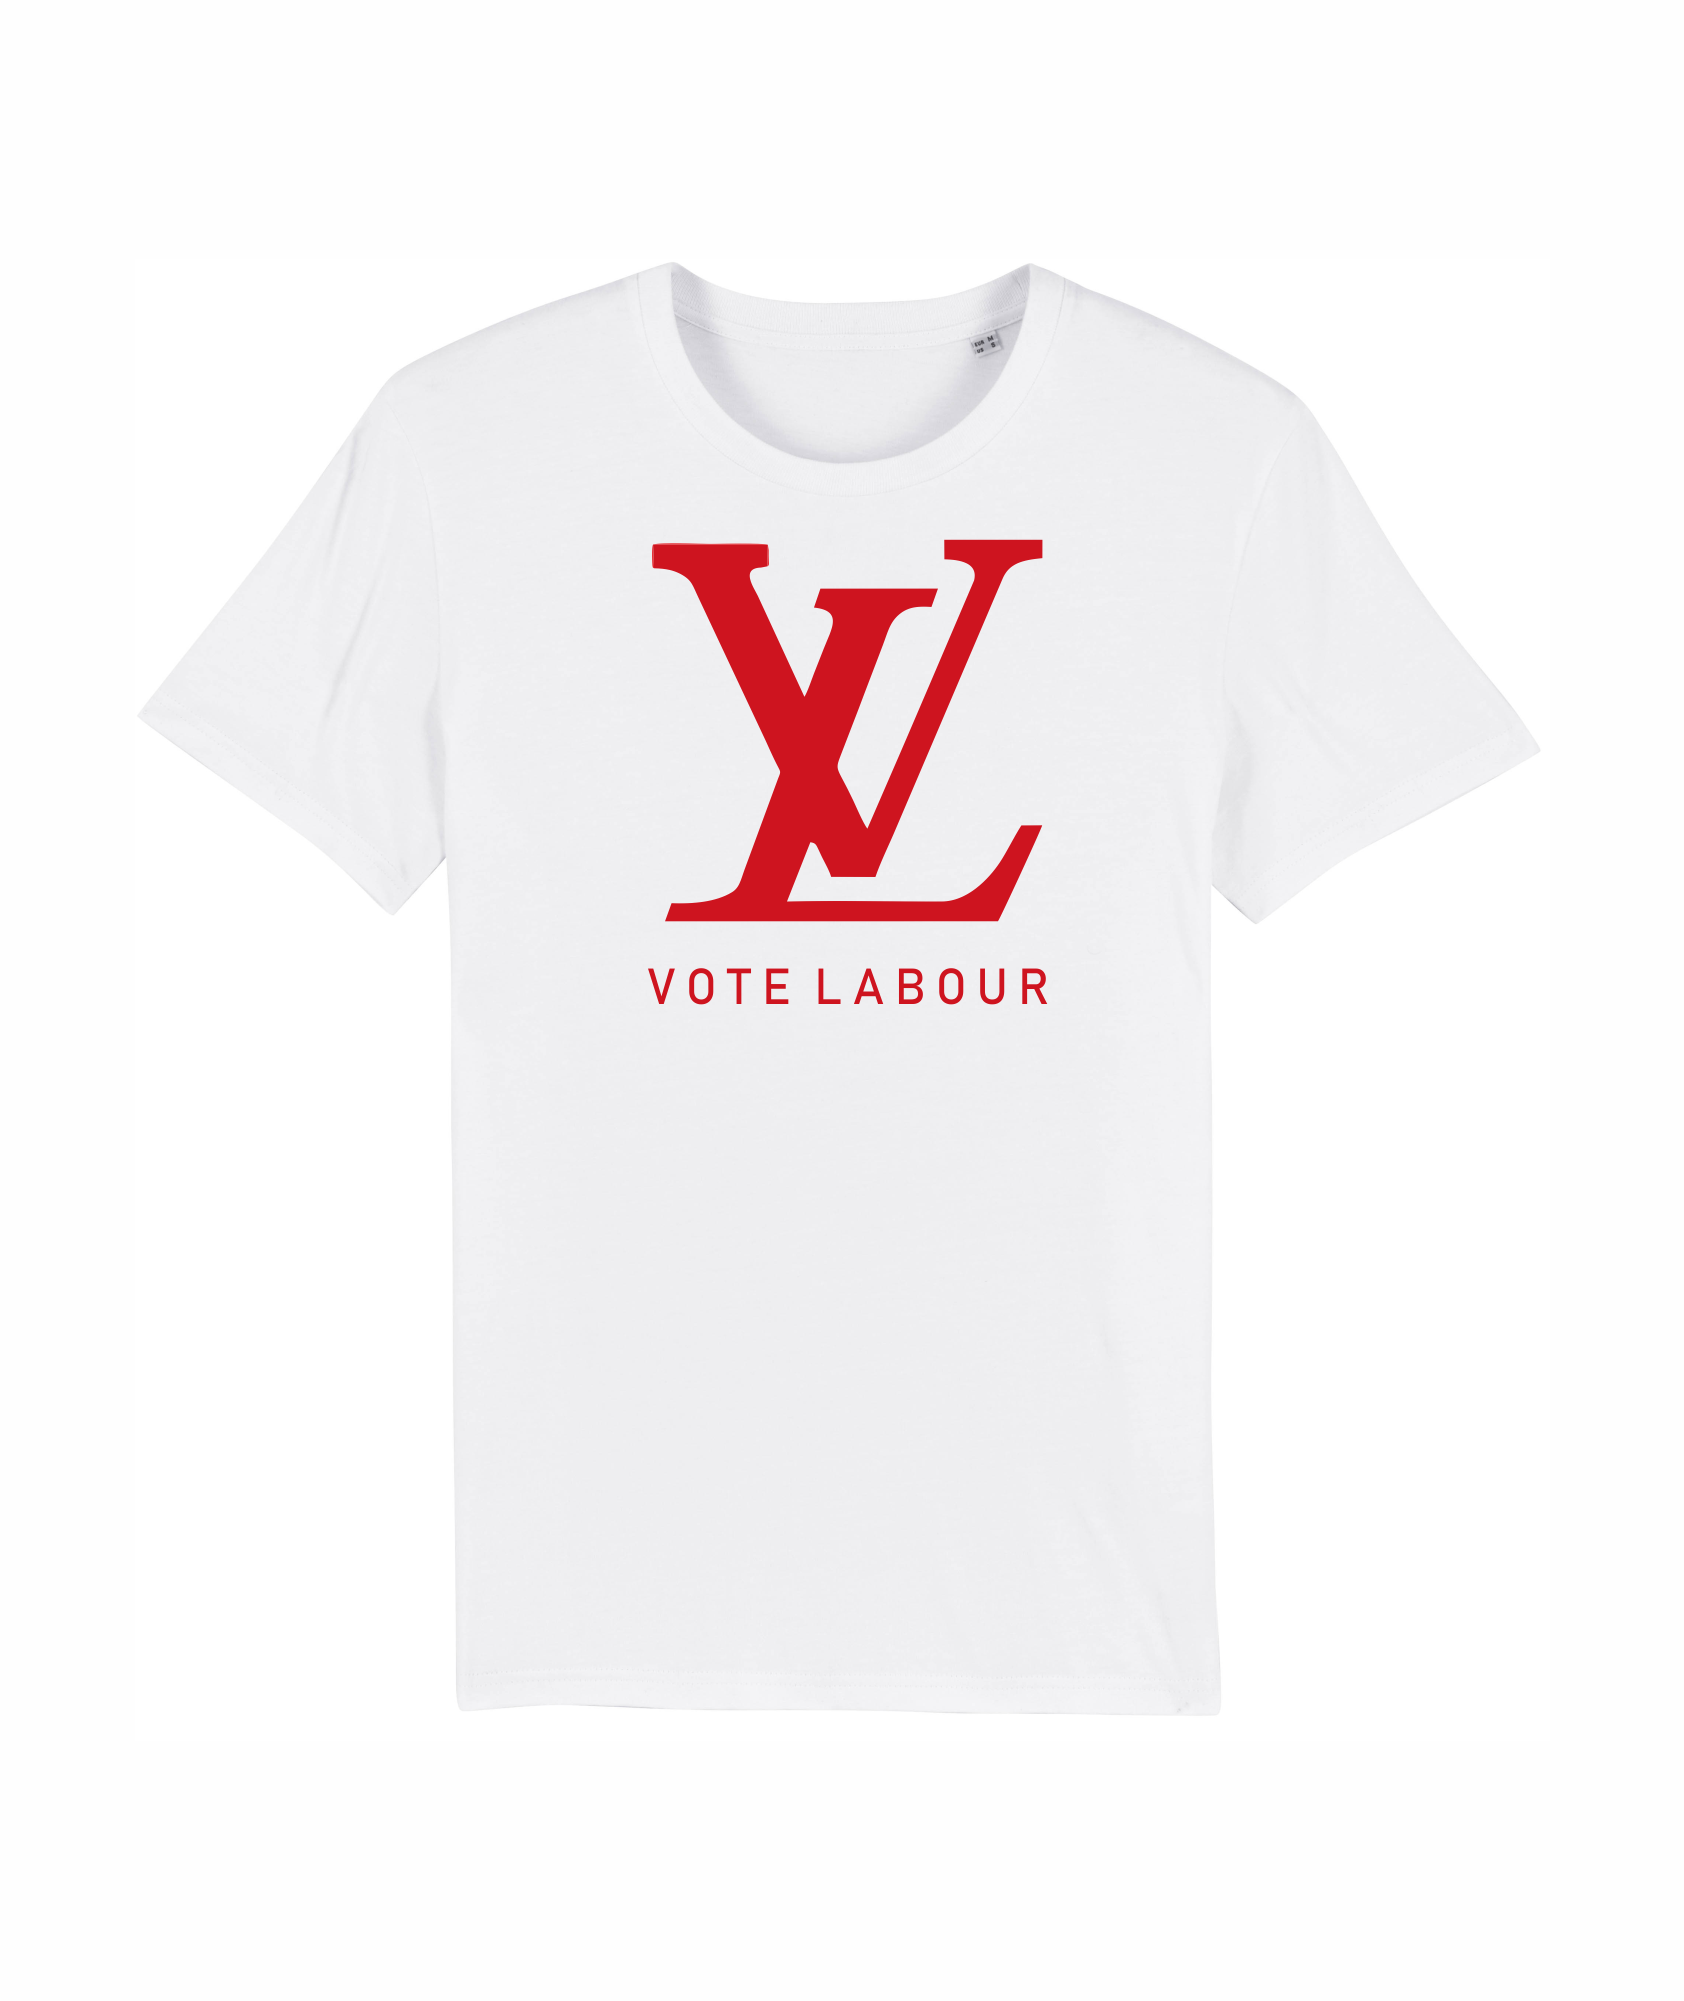 Corbyn Louis Vuitton T-Shirt — Stitch To Stitch